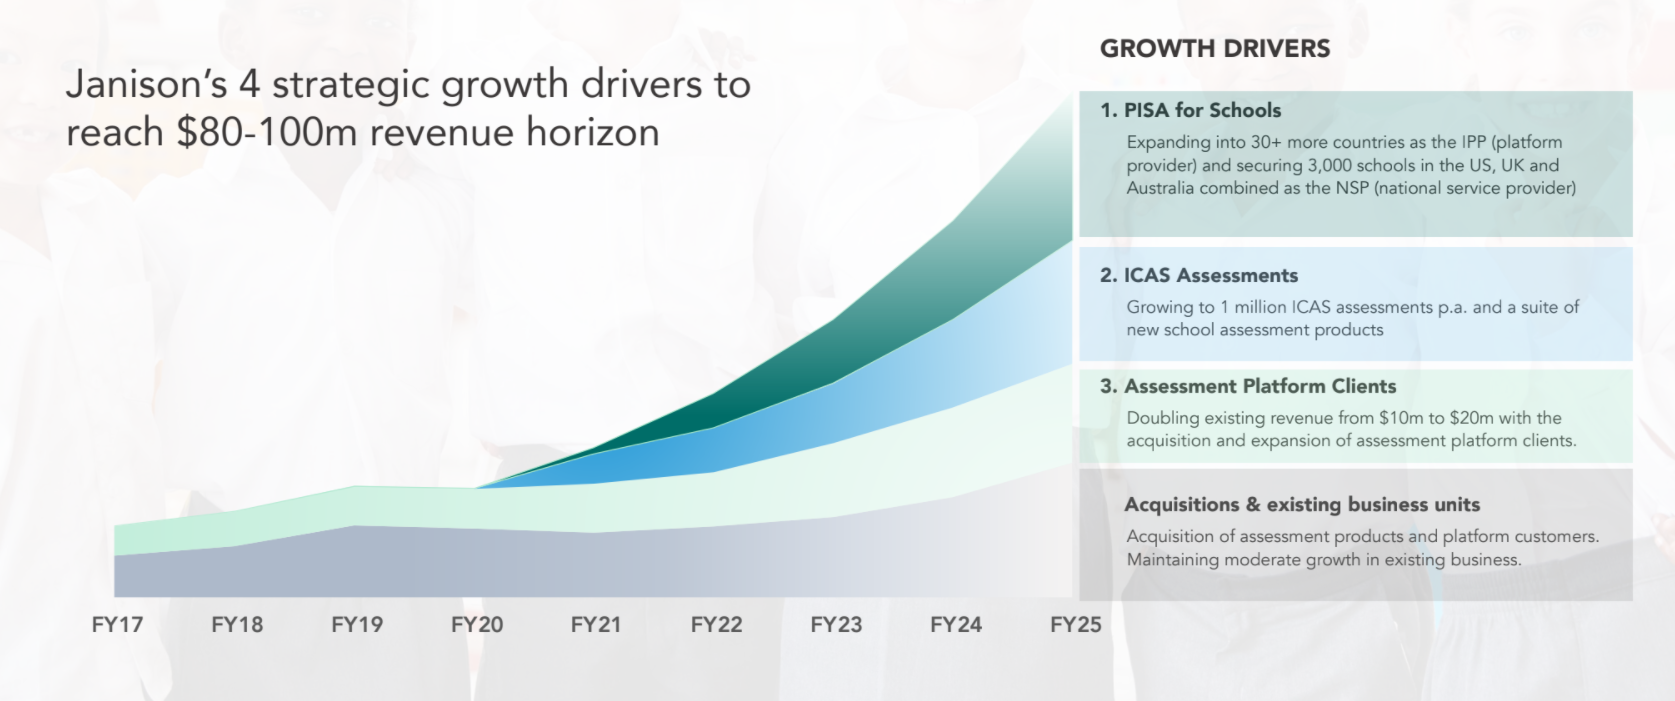 Janison's 4 strategic growth drivers